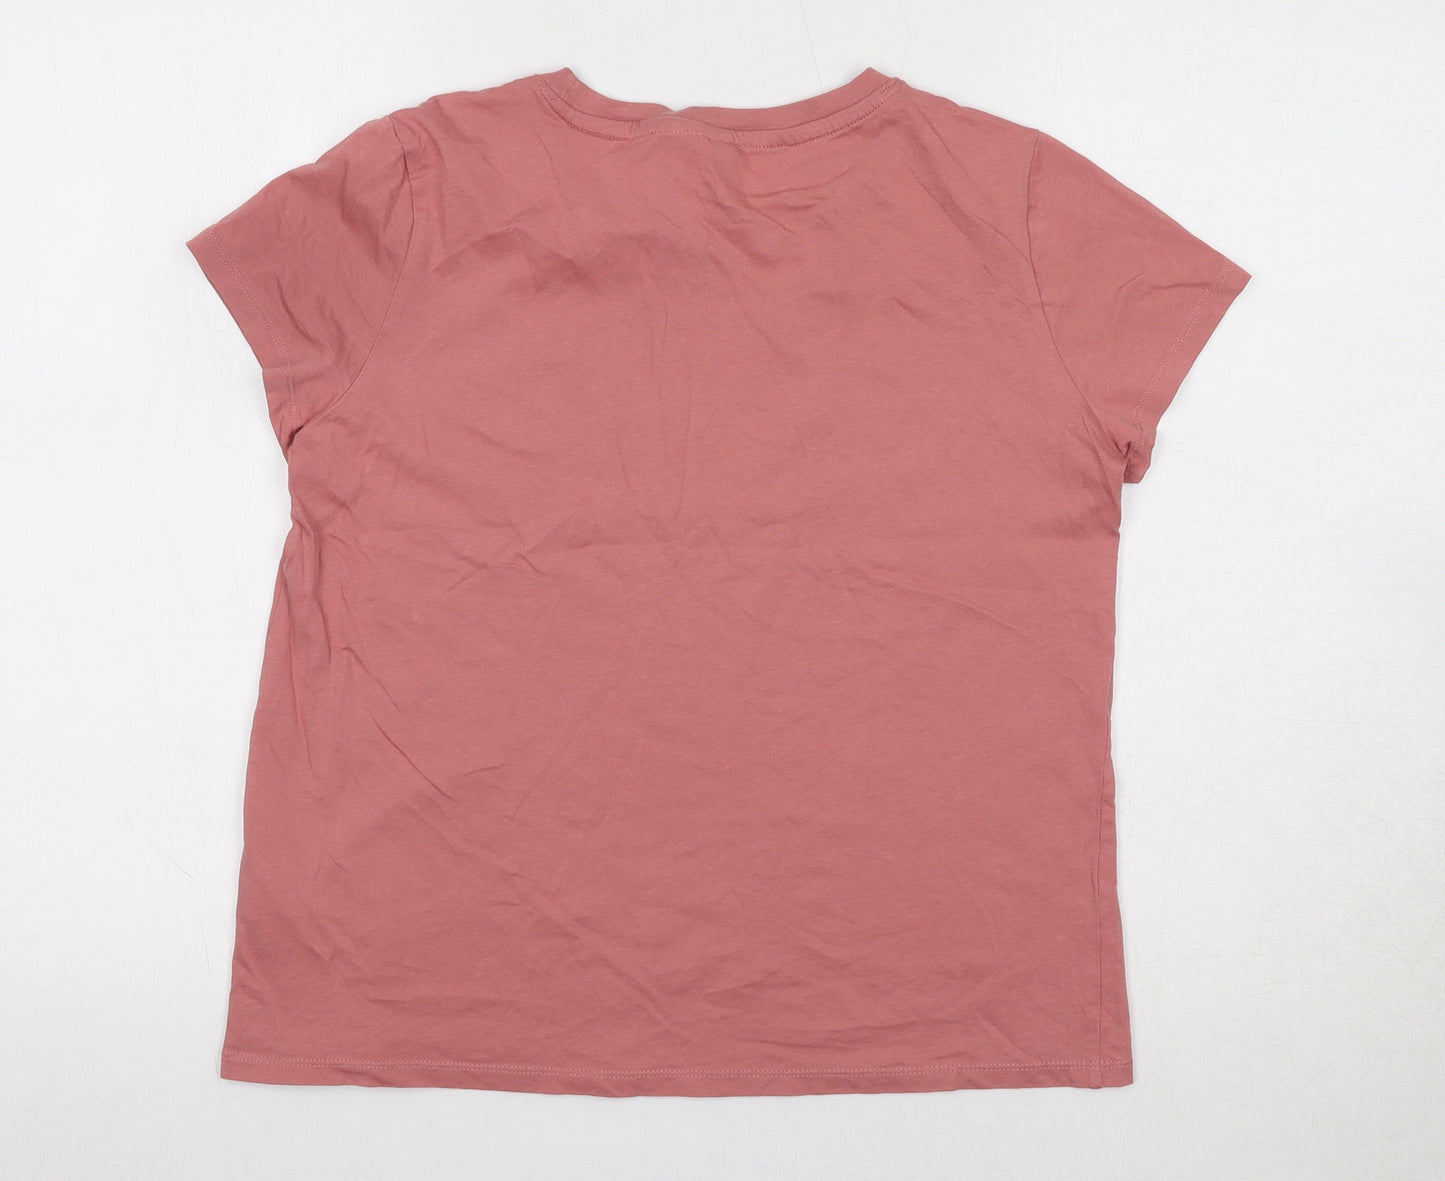 H&M Womens Pink Cotton Basic T-Shirt Size M Crew Neck - Love